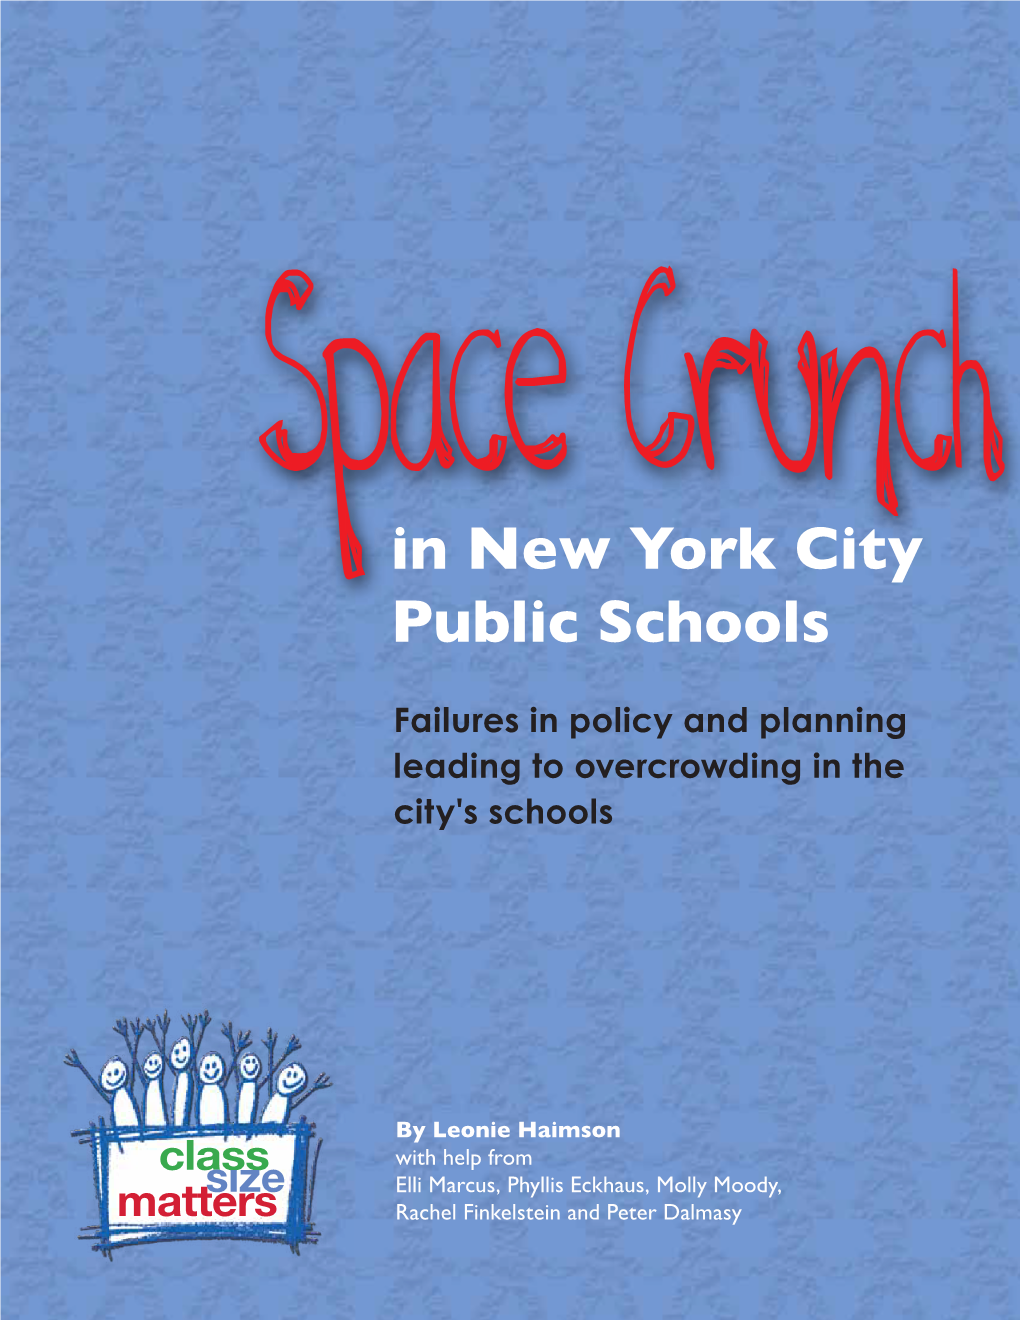 In New York City Public Schools